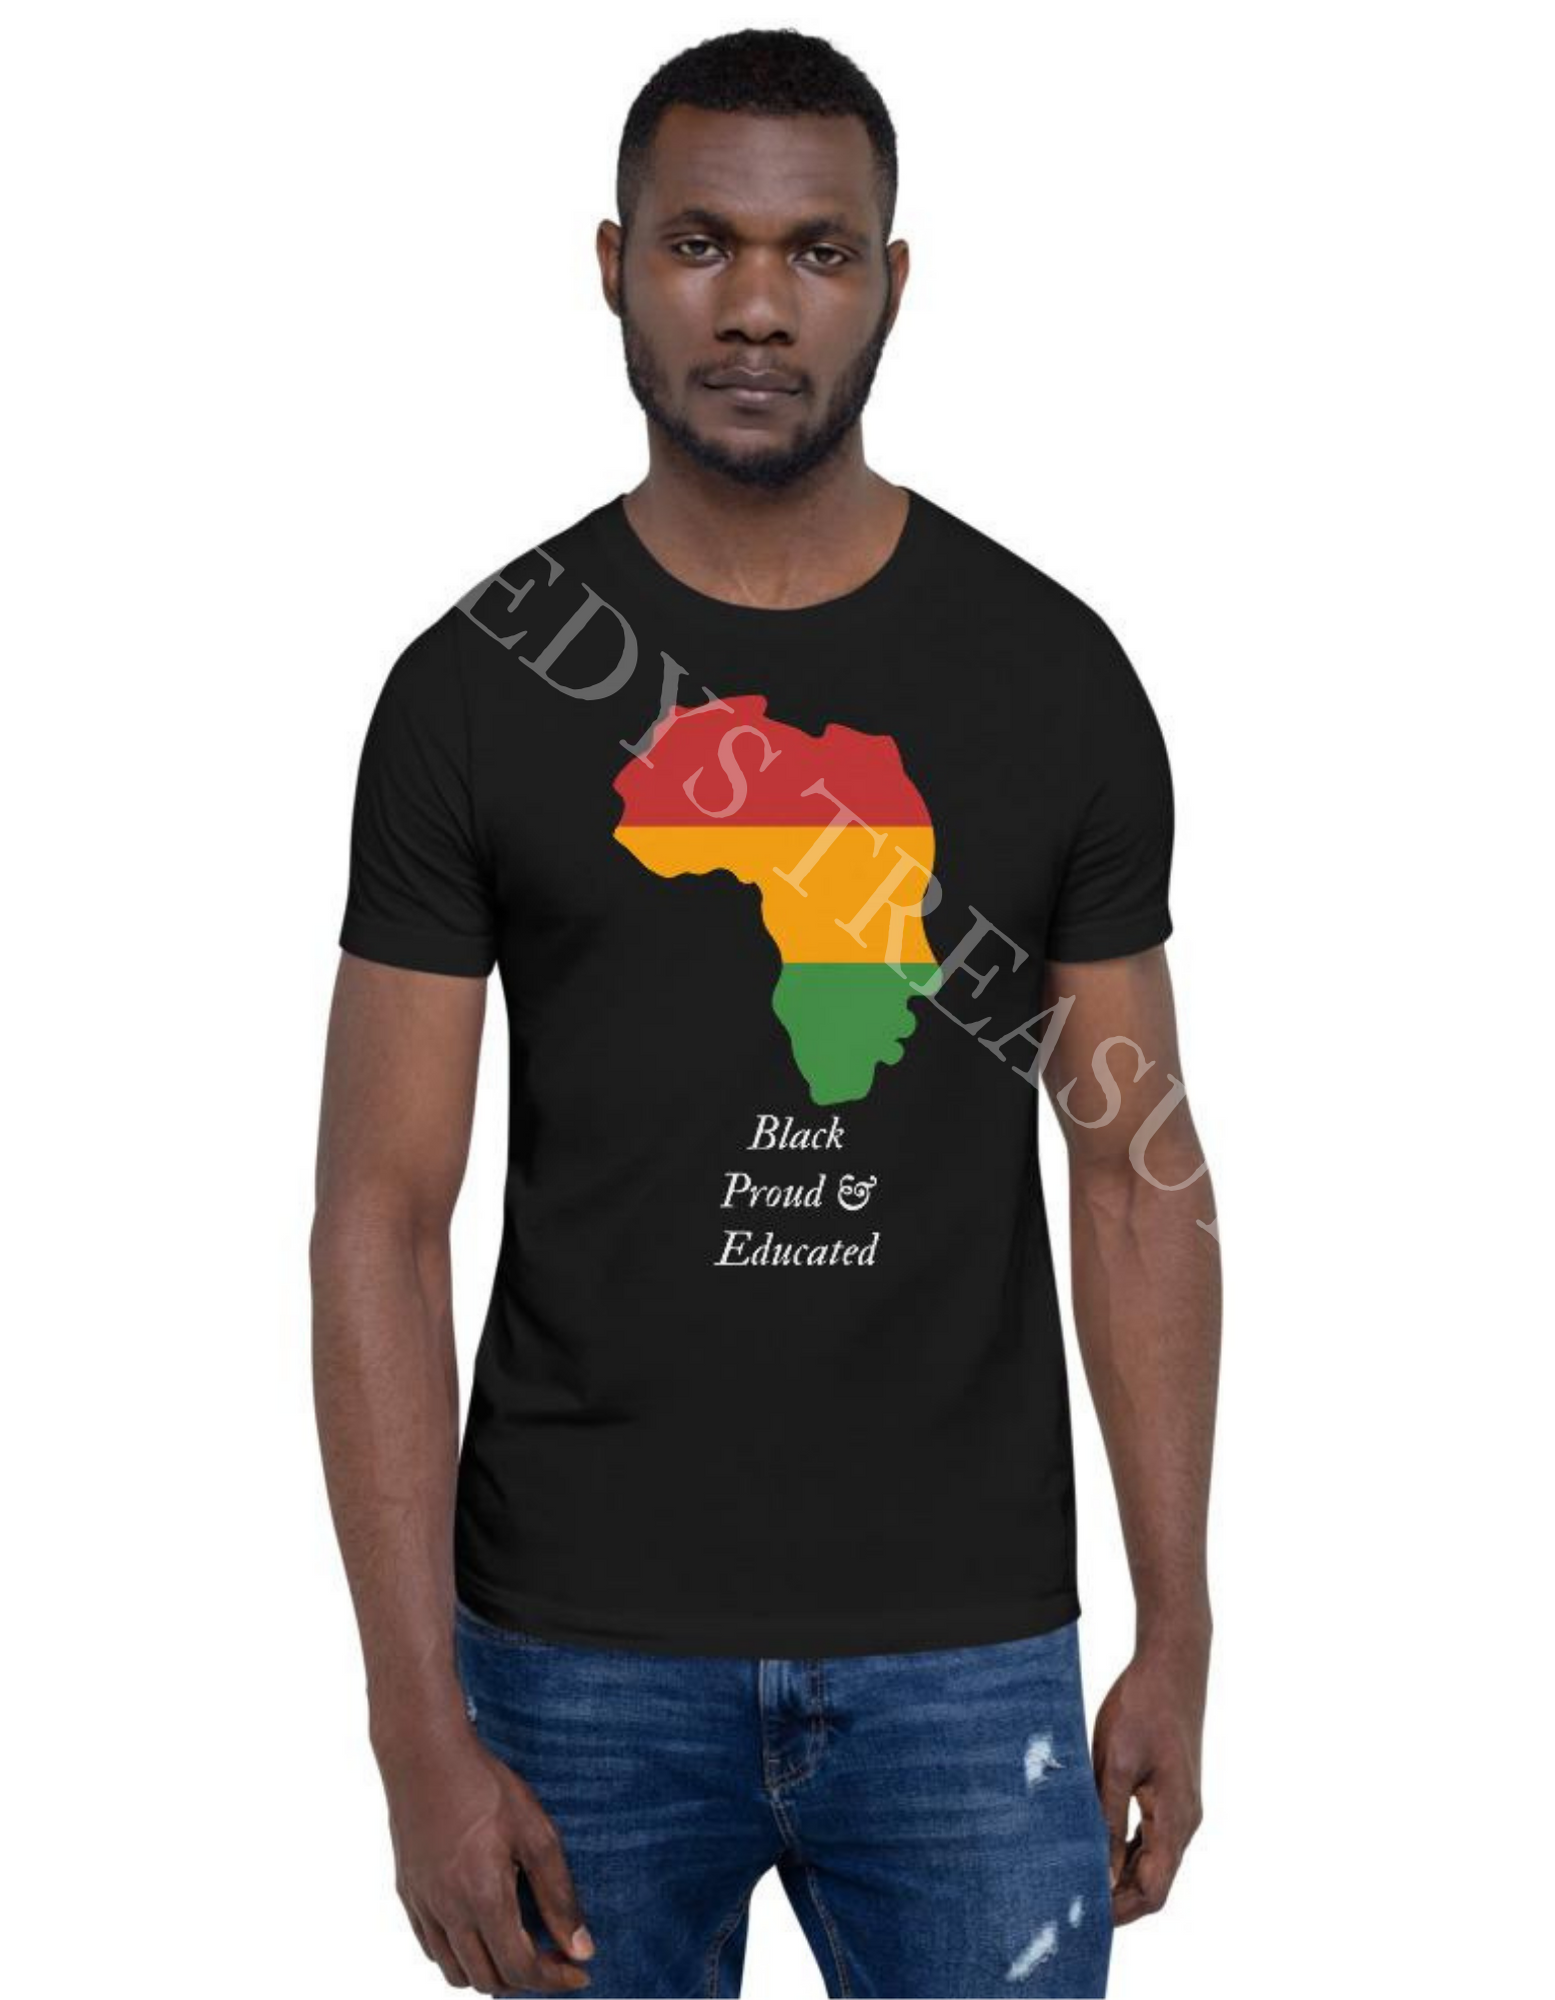 Black Proud & Educated Short-Sleeve Unisex T-Shirt - Edy's Treasures